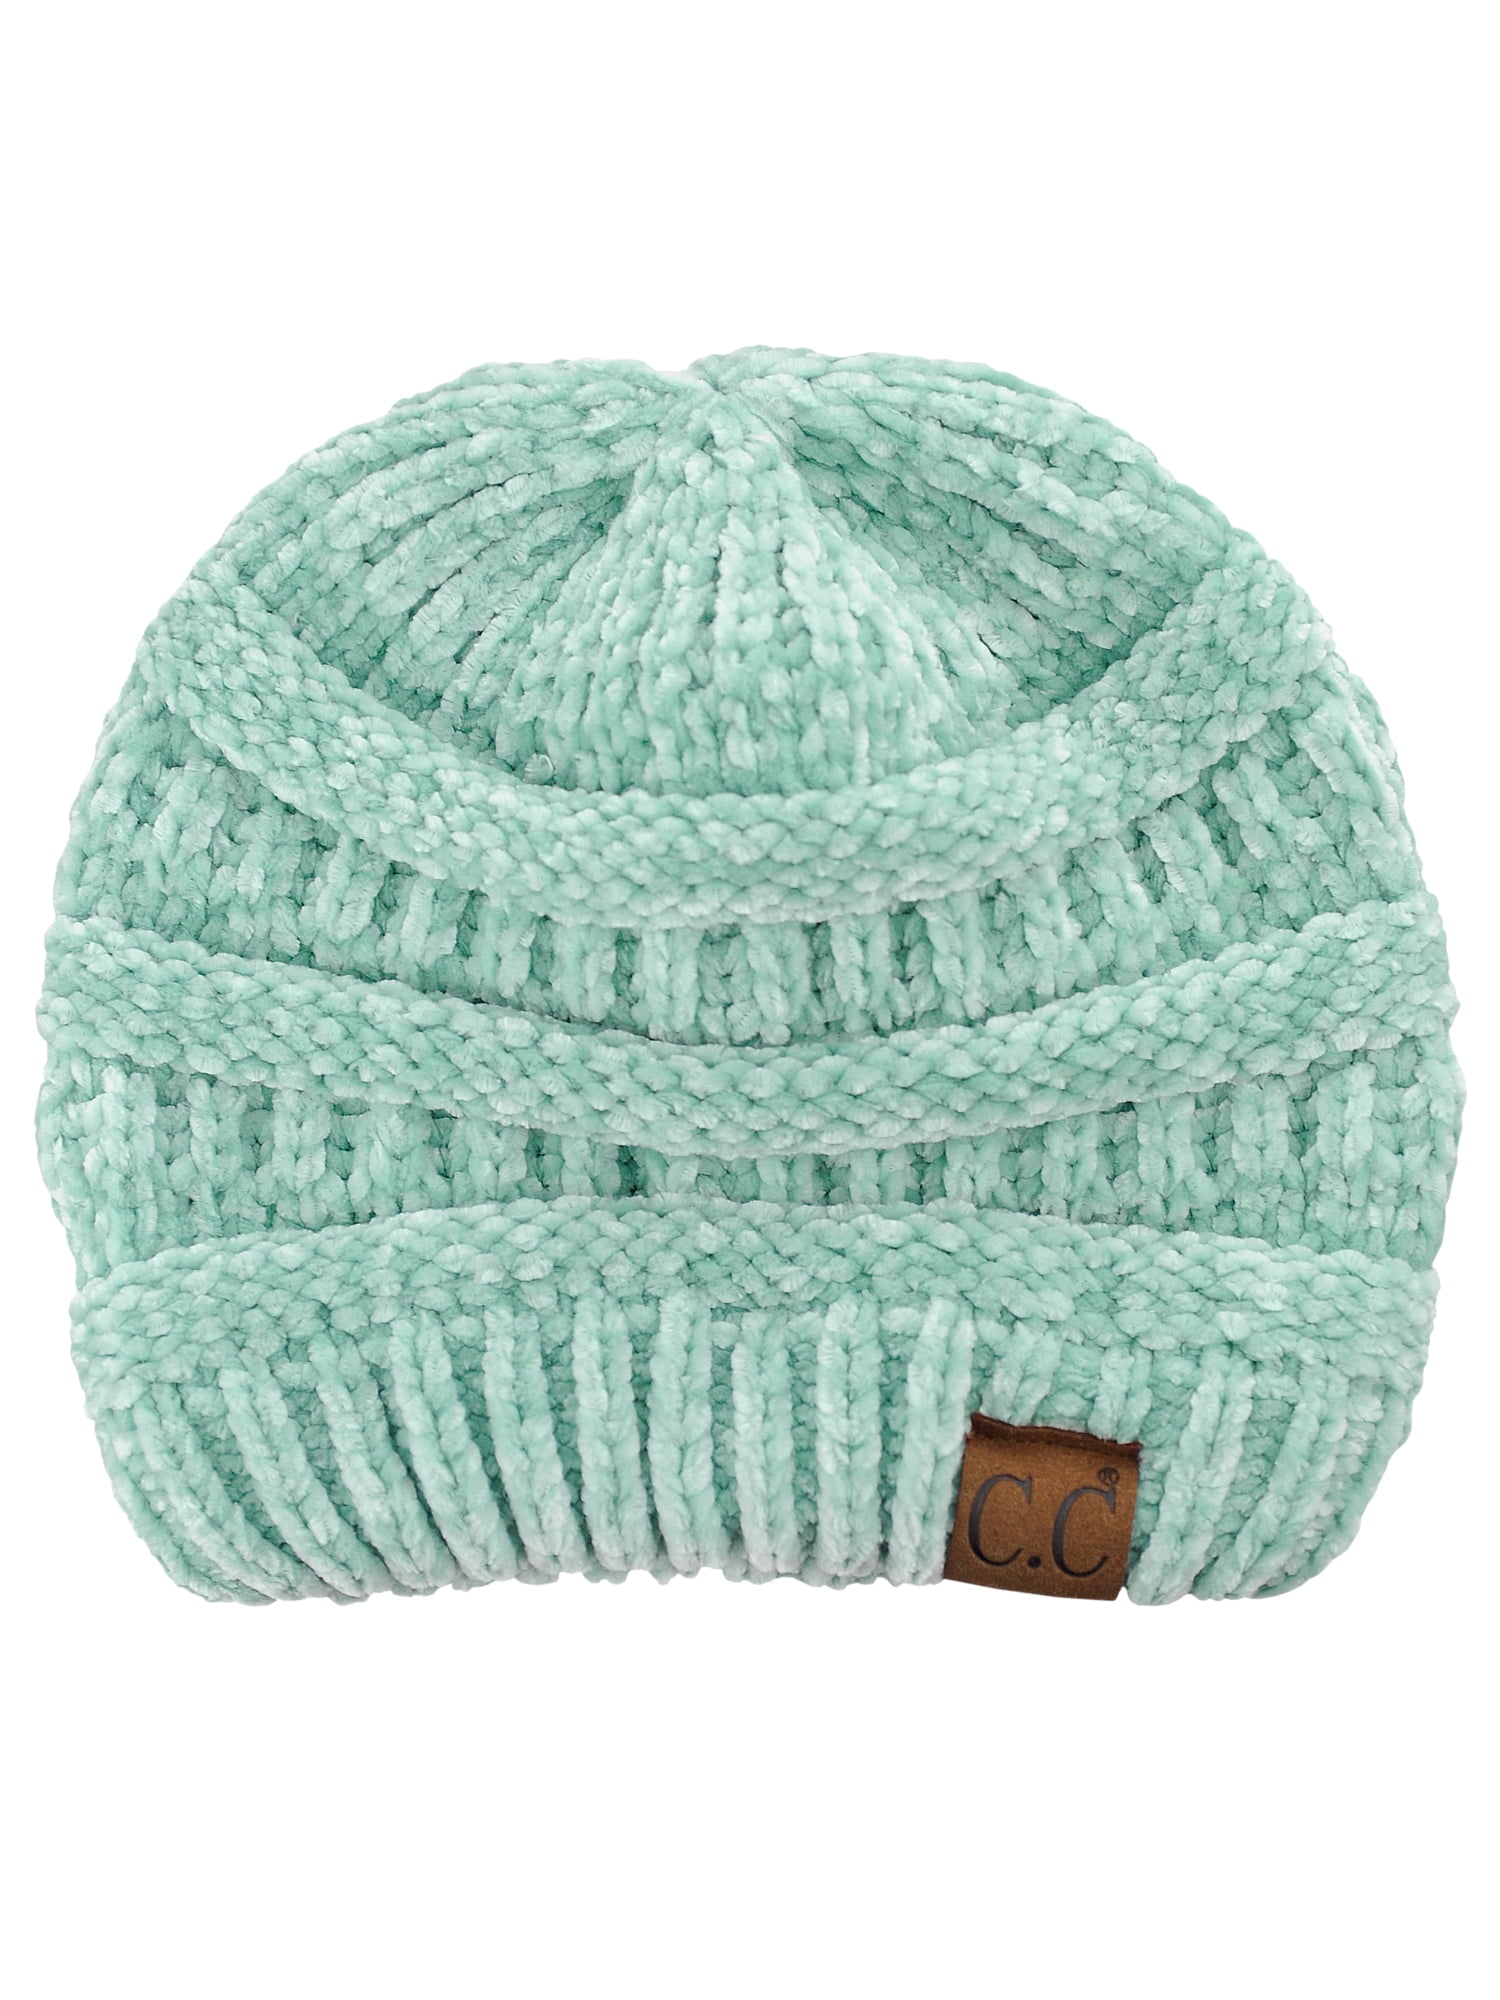 C.C Women's Chenille Soft Warm Thick Knit Beanie Cap Hat 